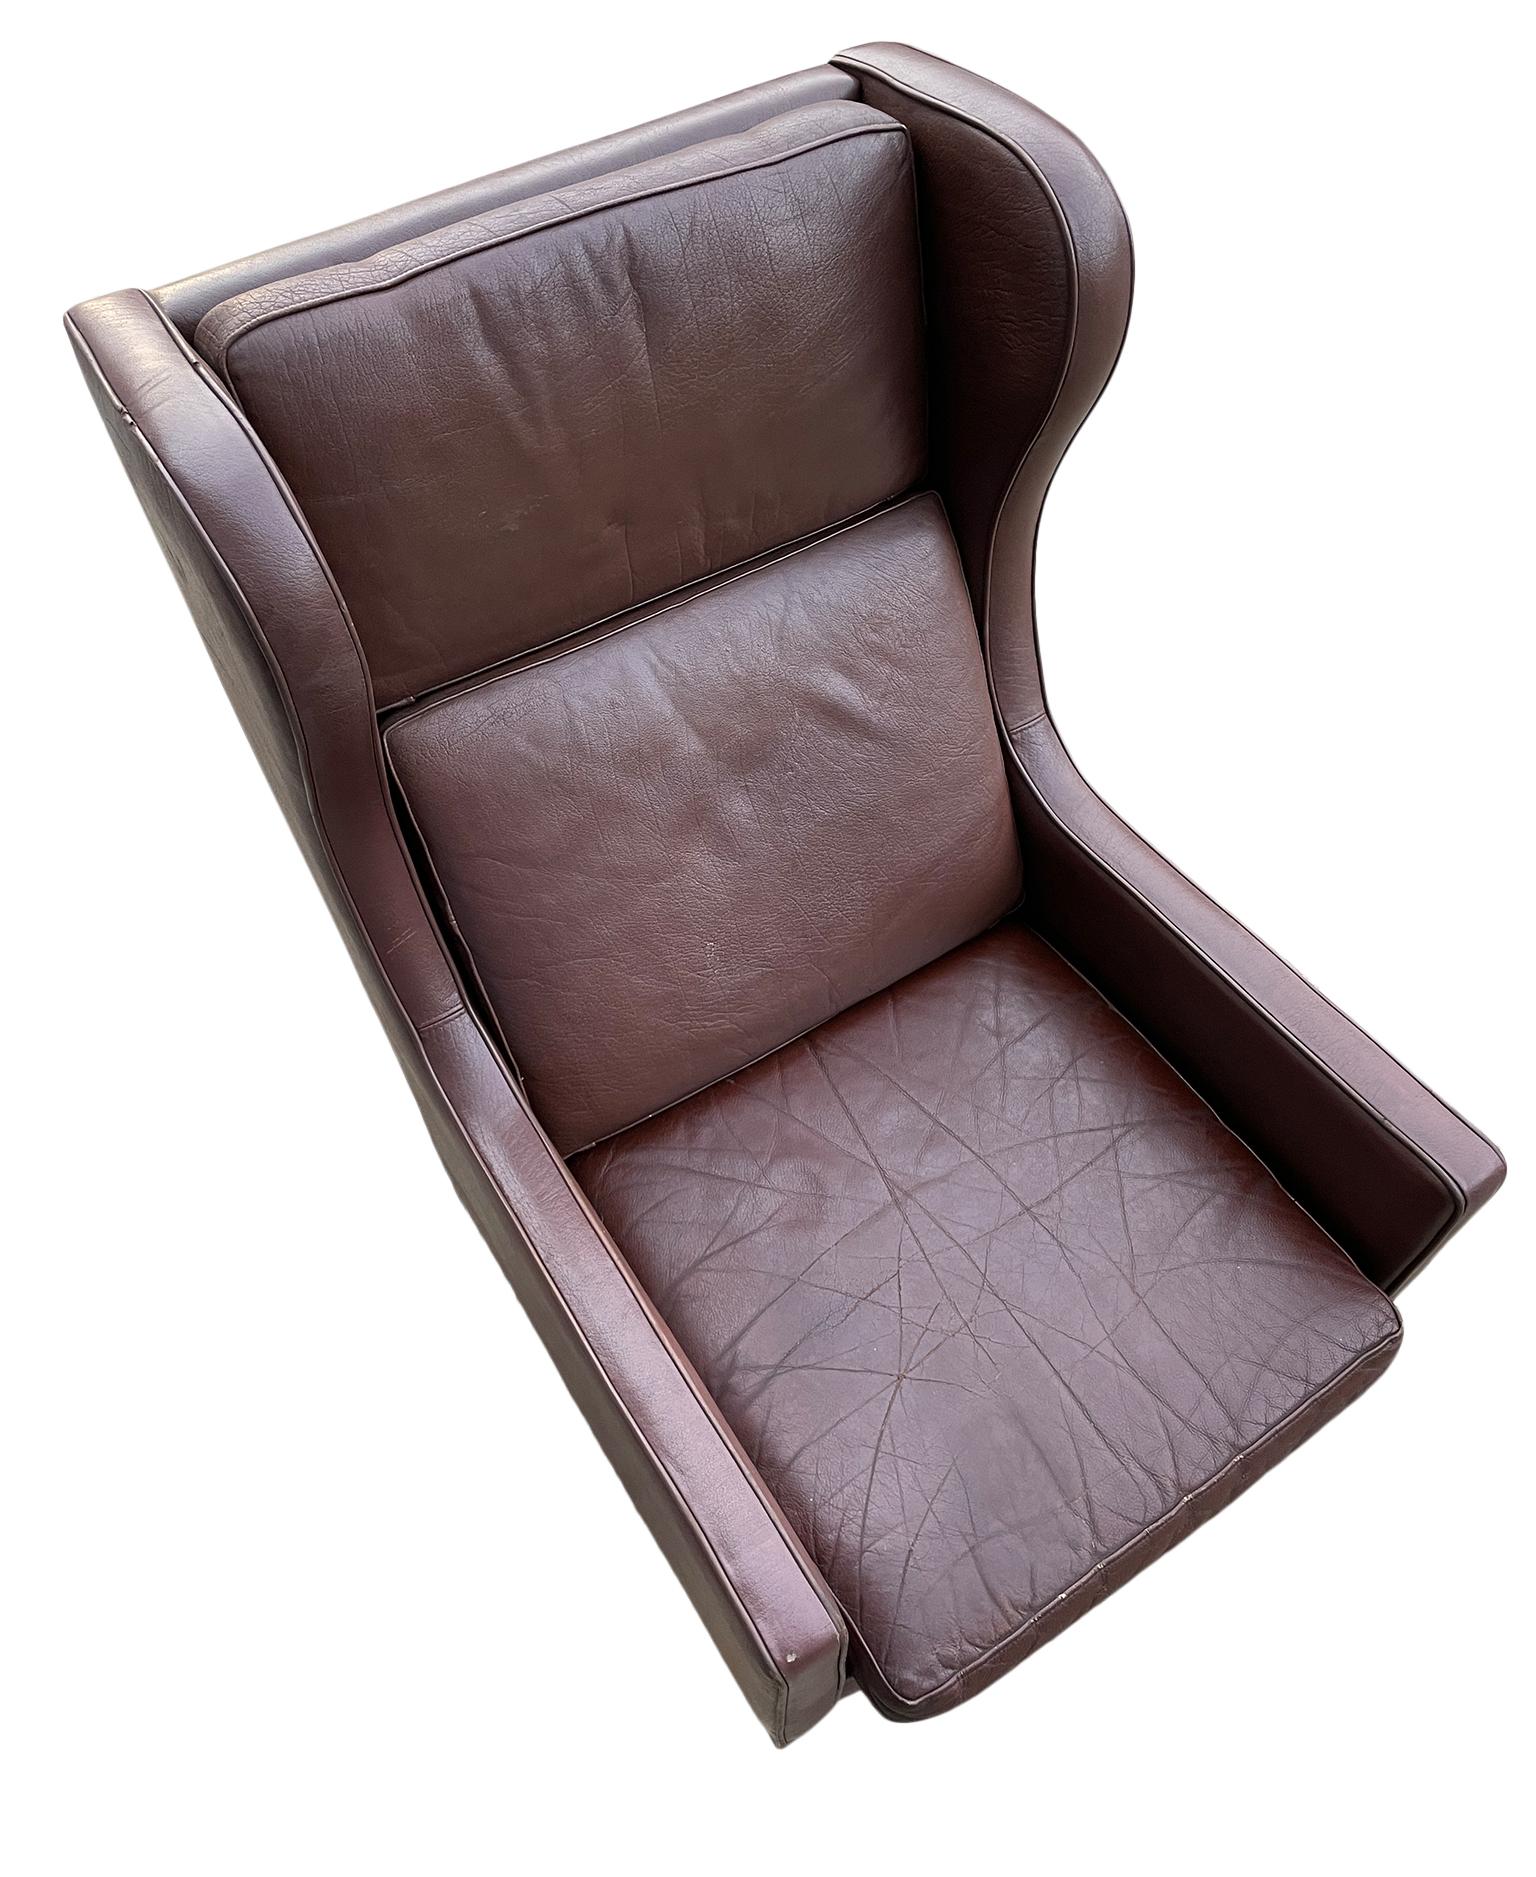 Midcentury Danish Modern Wingback Leather Chair by Børge Mogensen 2